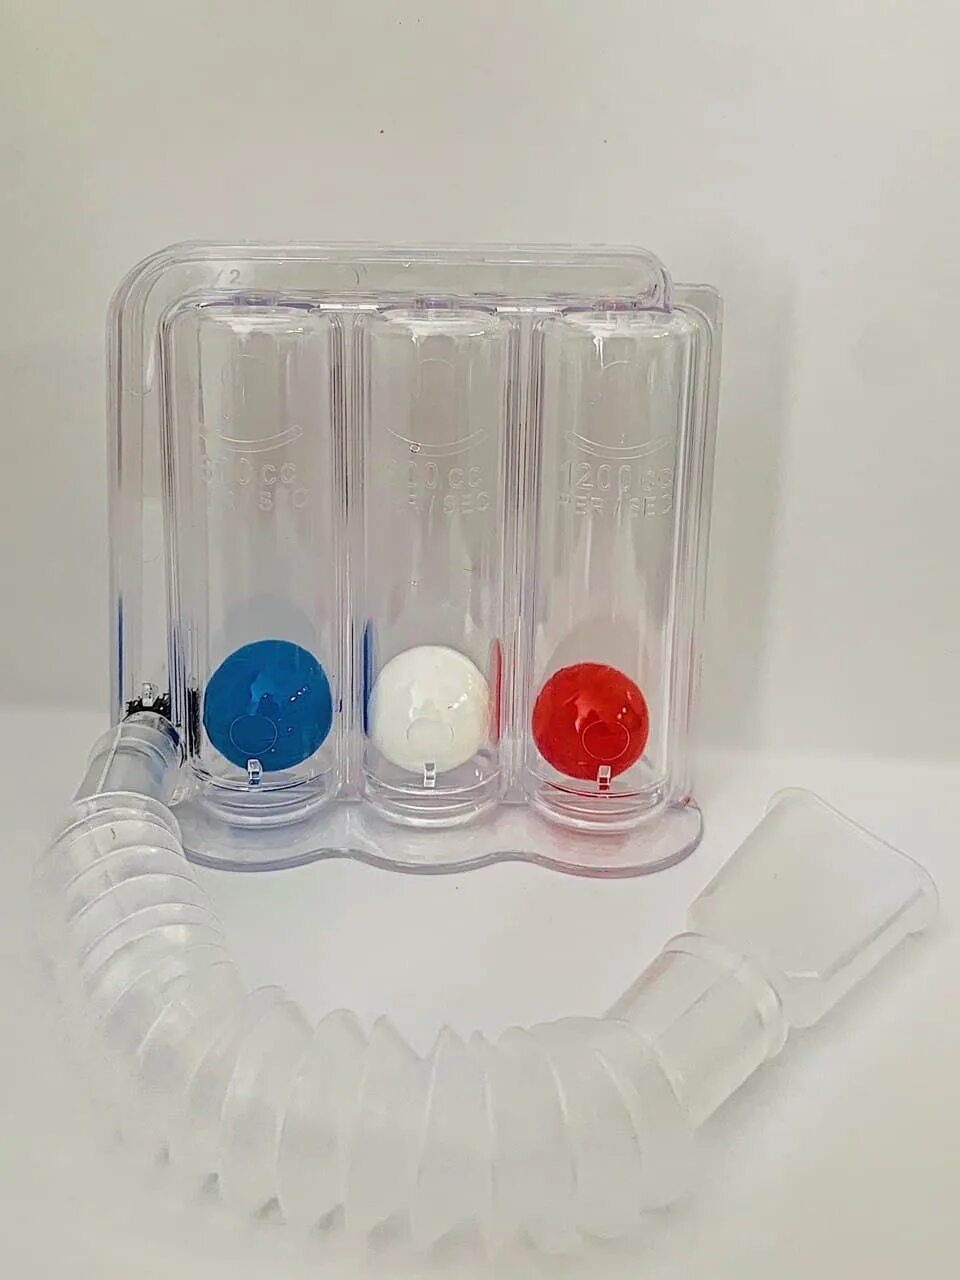 Дыхательный тренажер threshold pep. Тренажер дыхательный Plasti-med 180101. Threshold IMT дыхательный тренажер. Дыхательный тренажер Plasti-med потоковый. Дыхательный тренажер respiro.